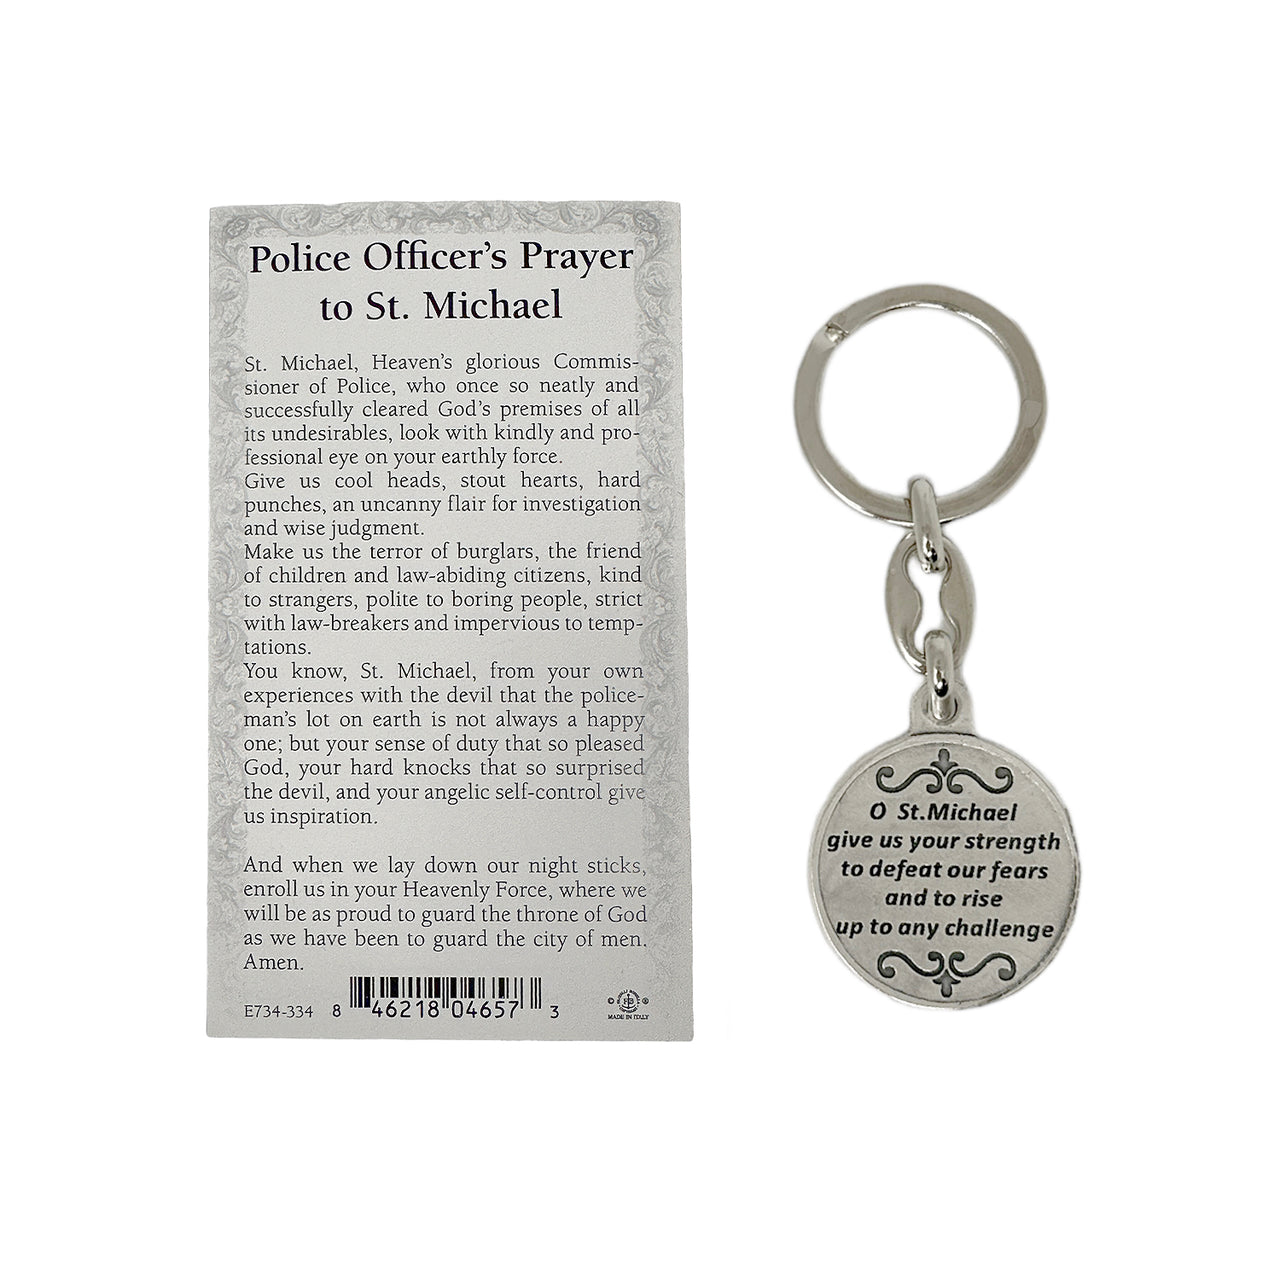 St. Michael Police Officer Prayer Keychain